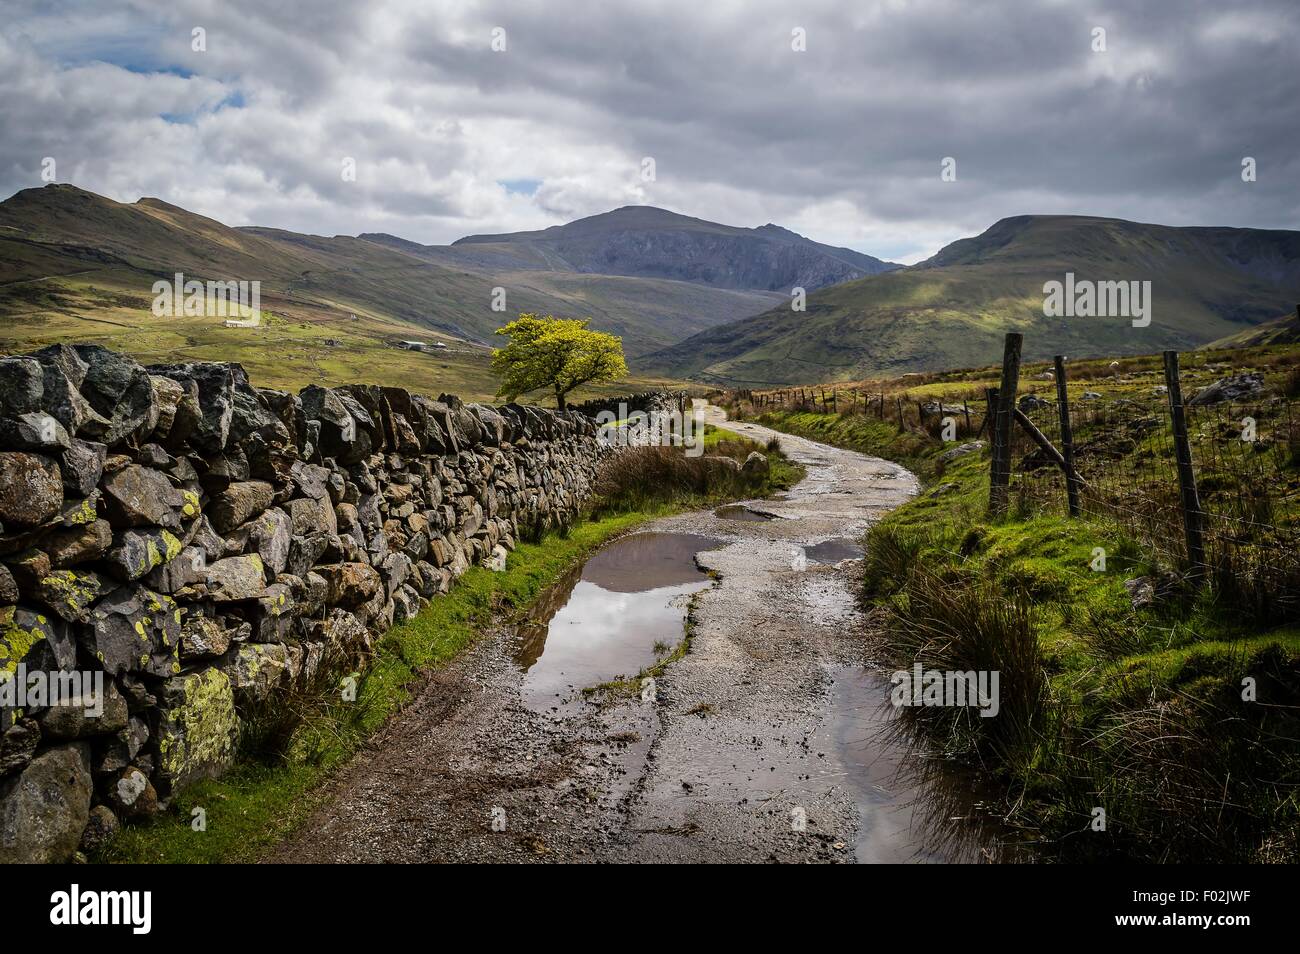 Winding path to Mount Snowdon, wales, United Kingdom Stock Photo